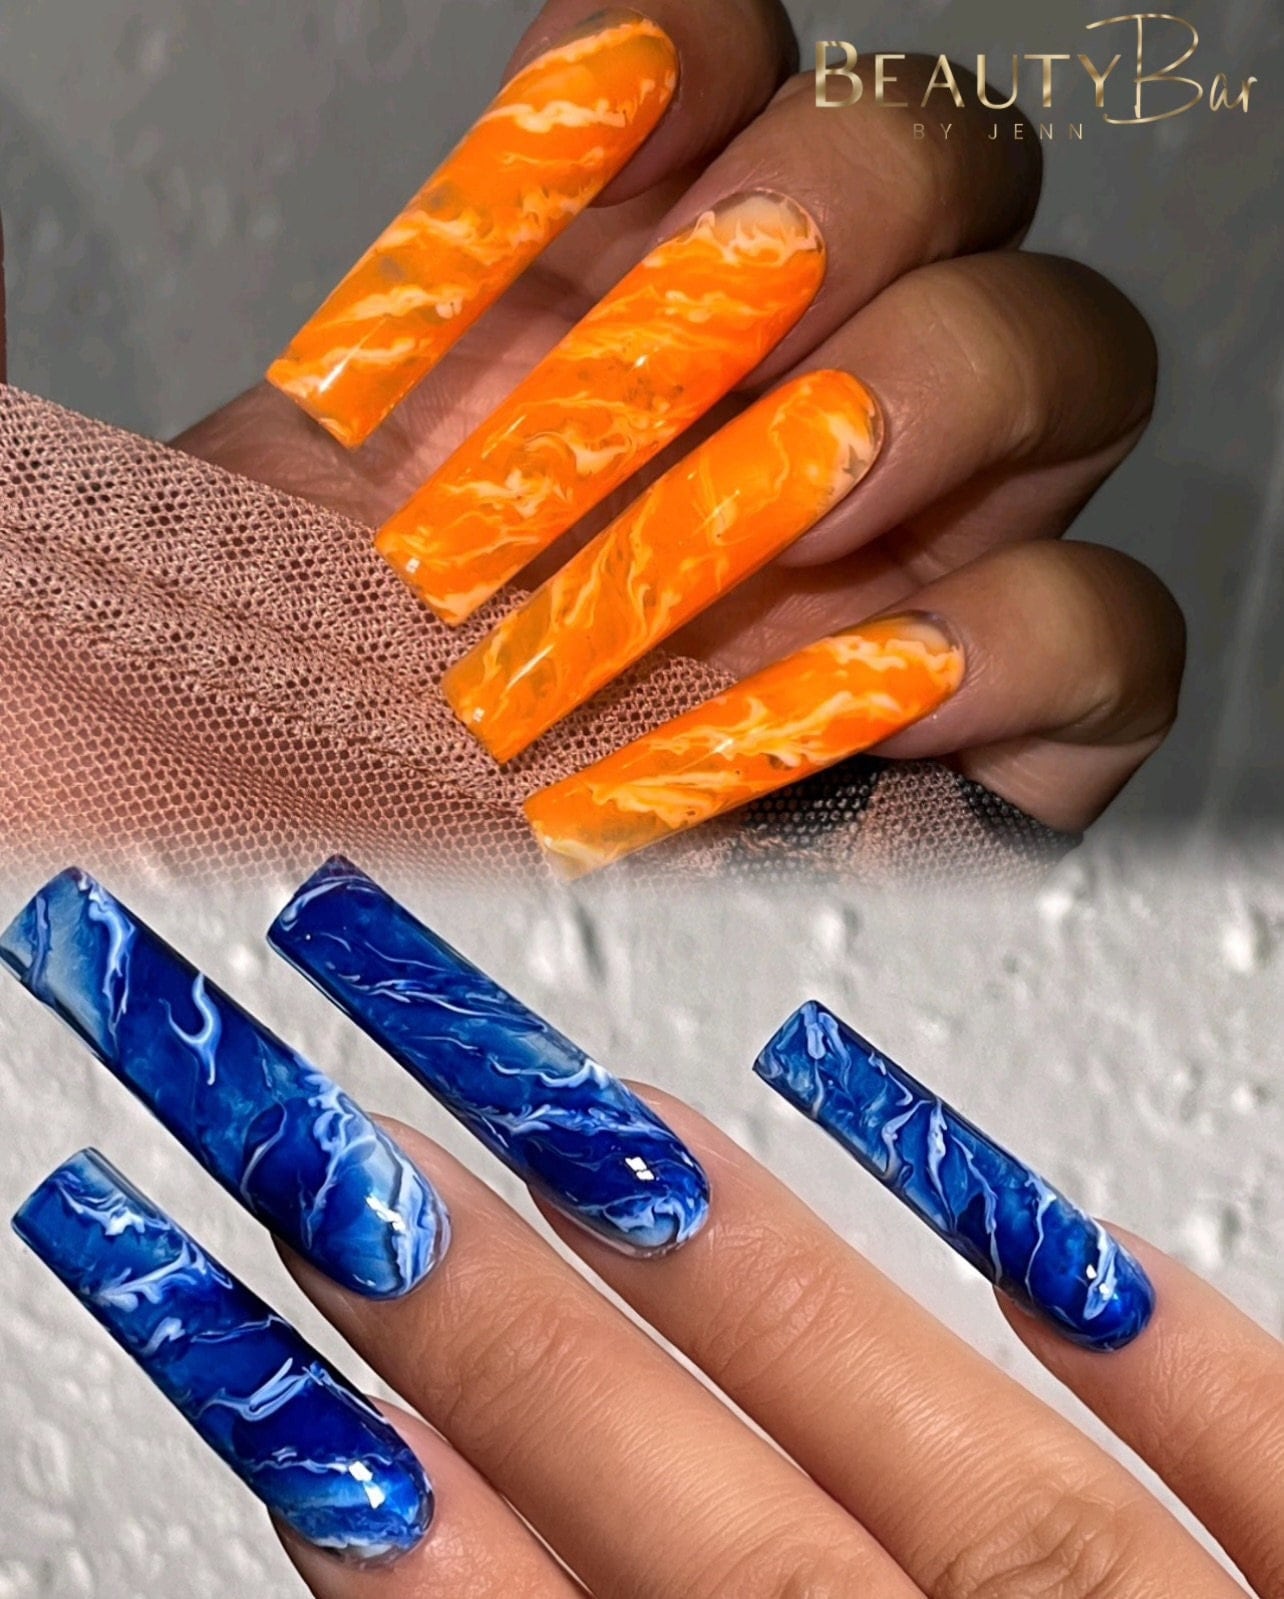 DIY at home acrylic nails afforable Blue purple swirl nail art - YouTube